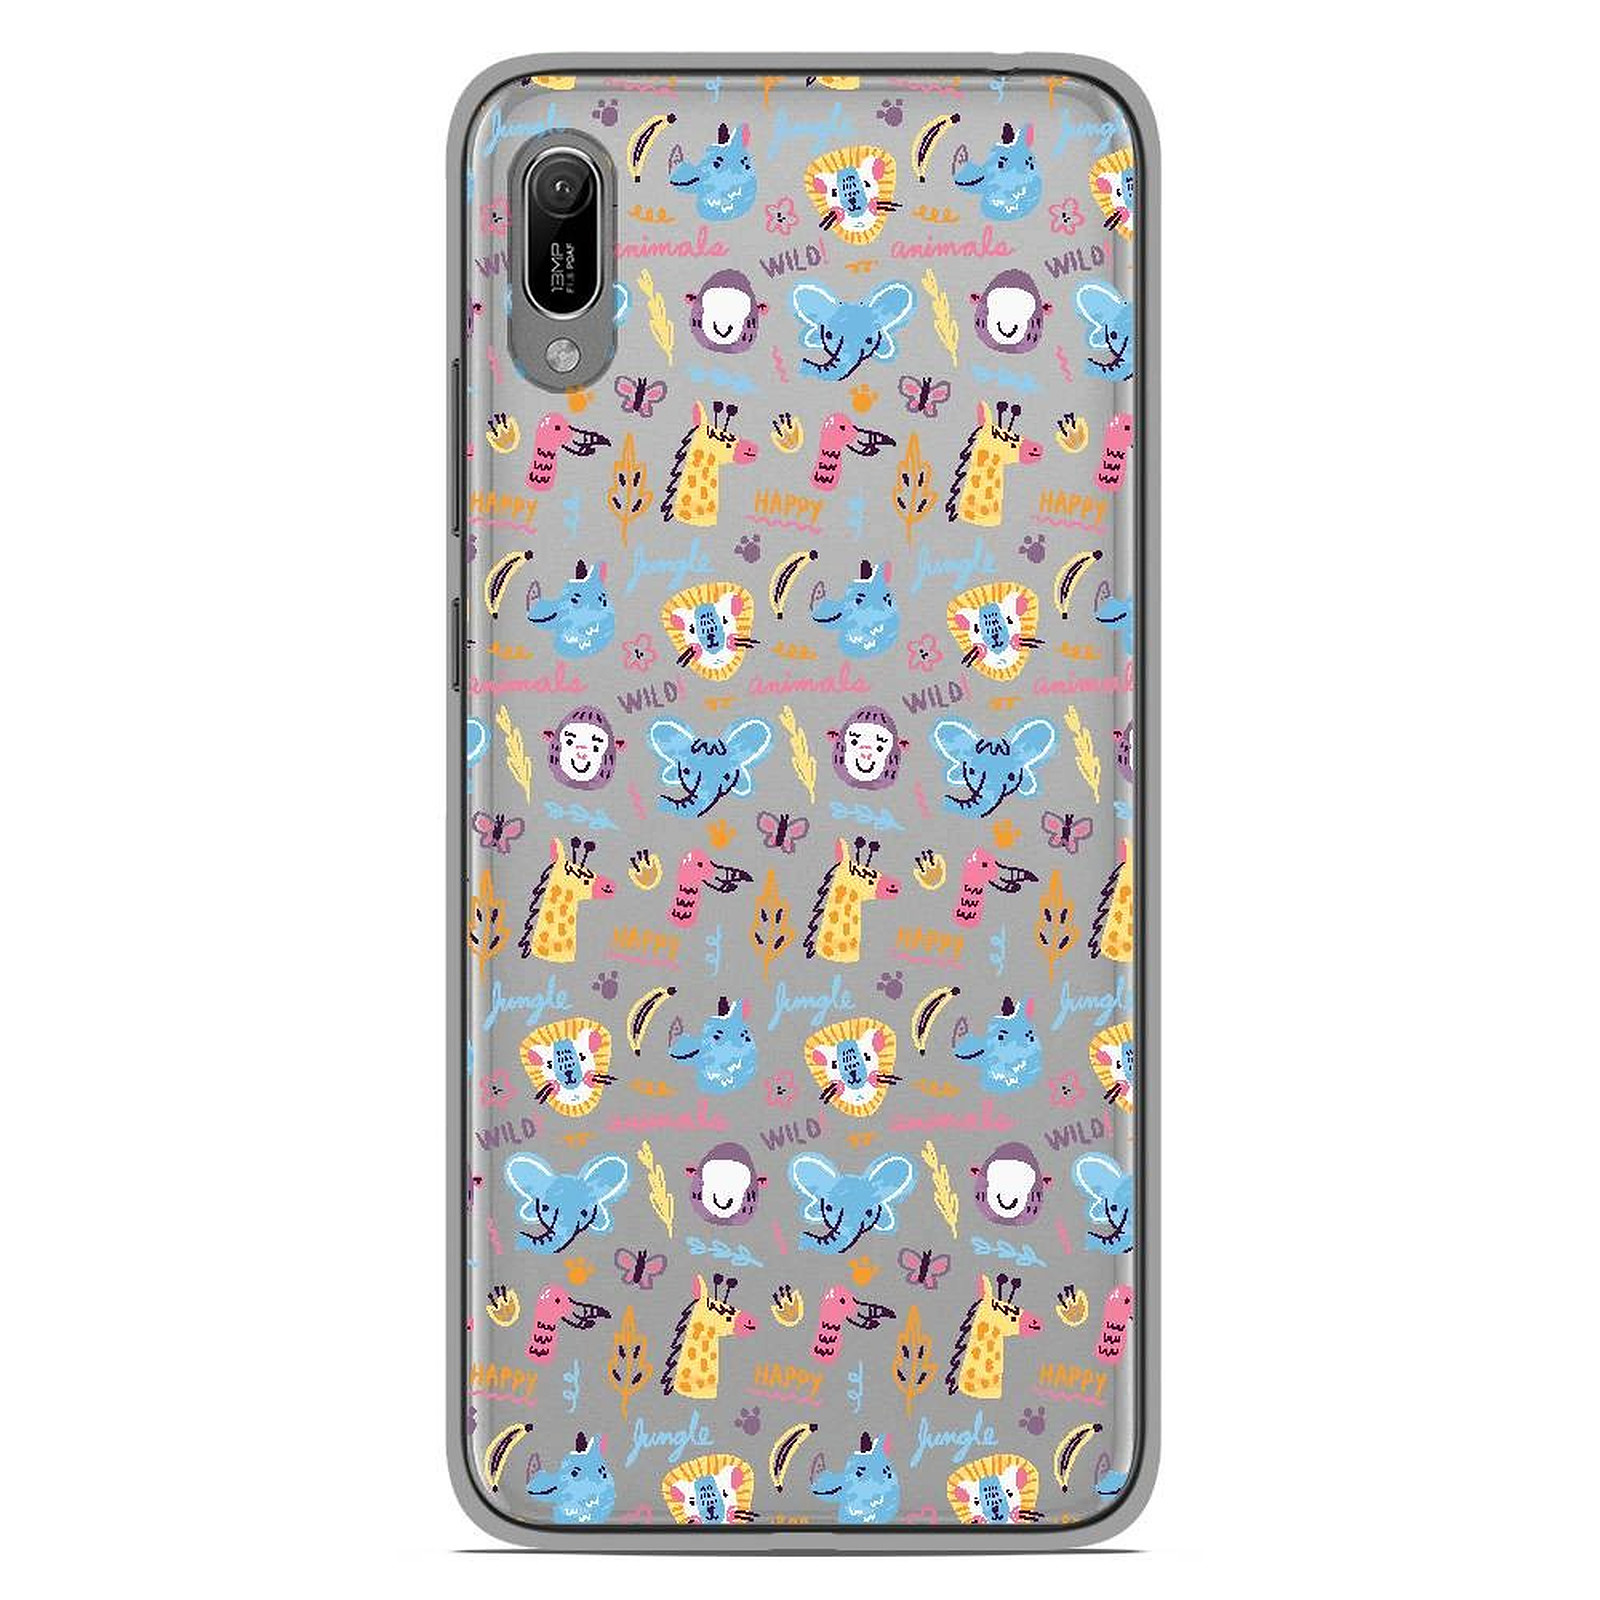 1001 Coques Coque silicone gel Huawei Y6 2019 motif Happy animals - Coque telephone 1001Coques